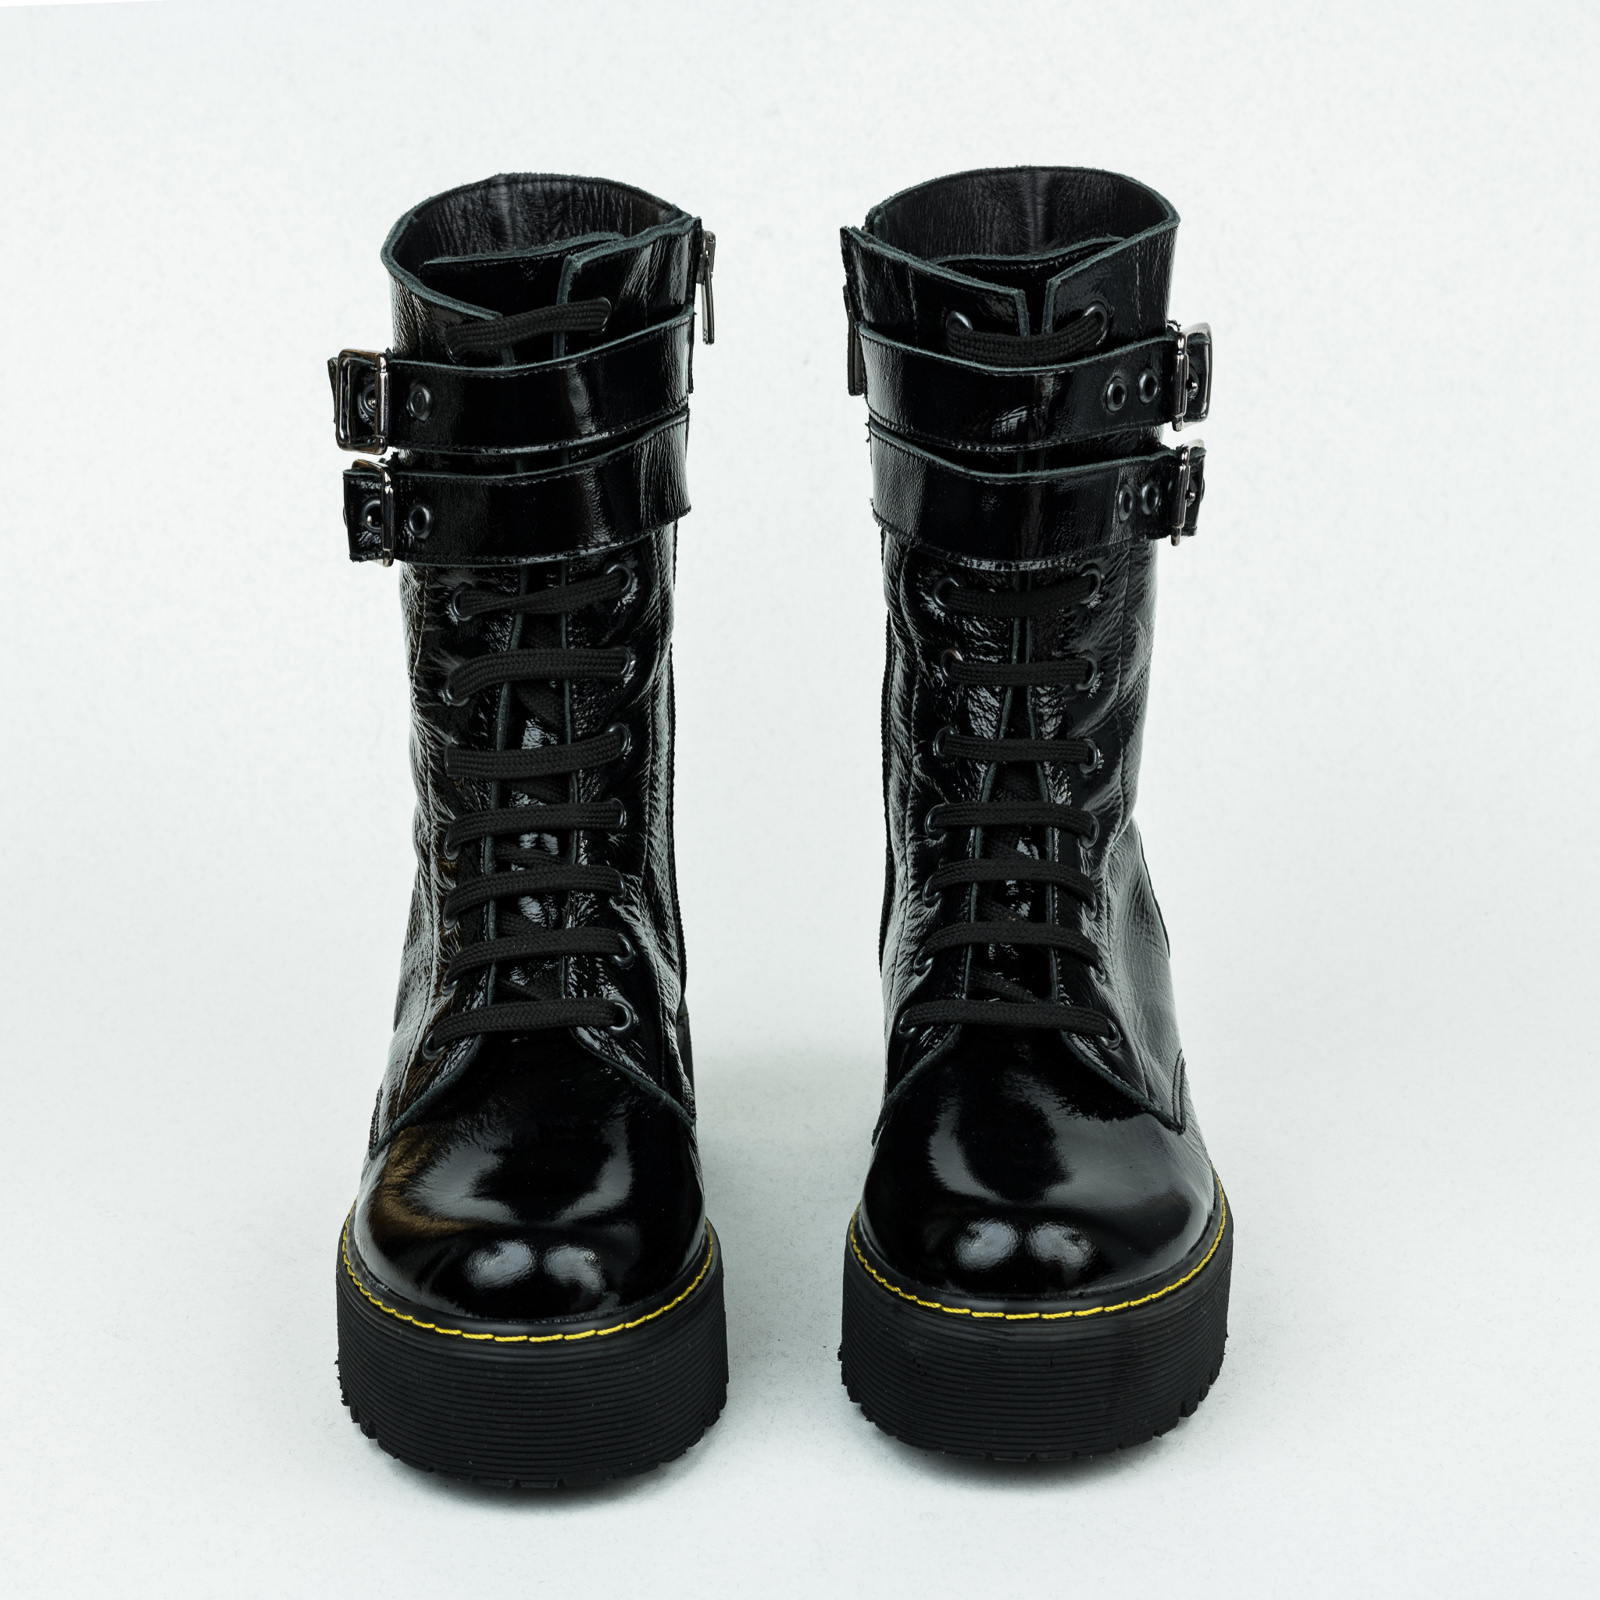 Leather WATERPROOF boots B204 - BLACK